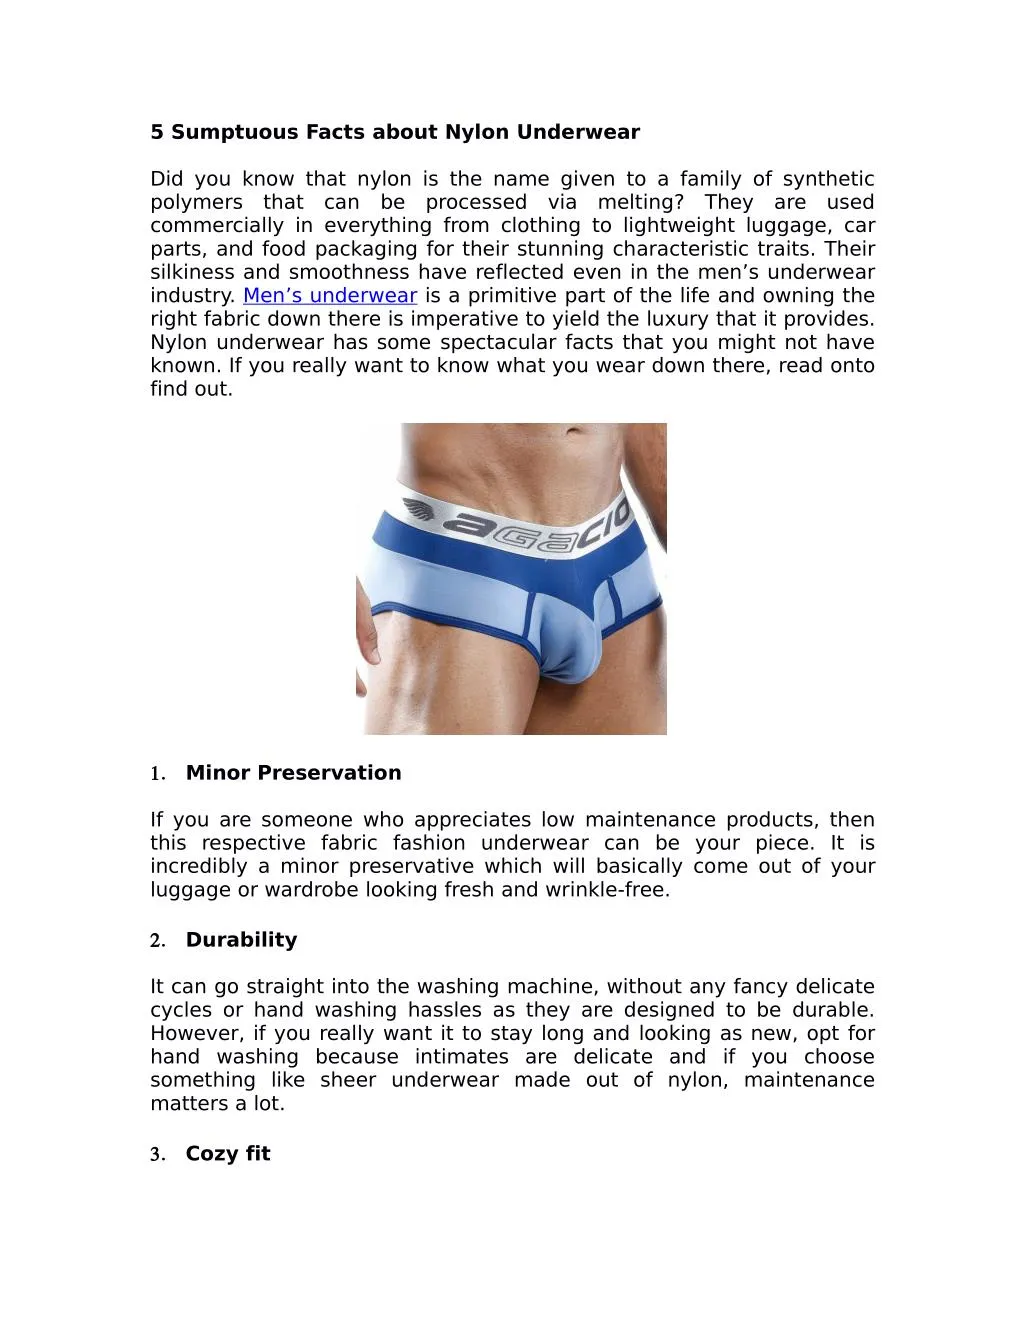 5 sumptuous facts about nylon underwear